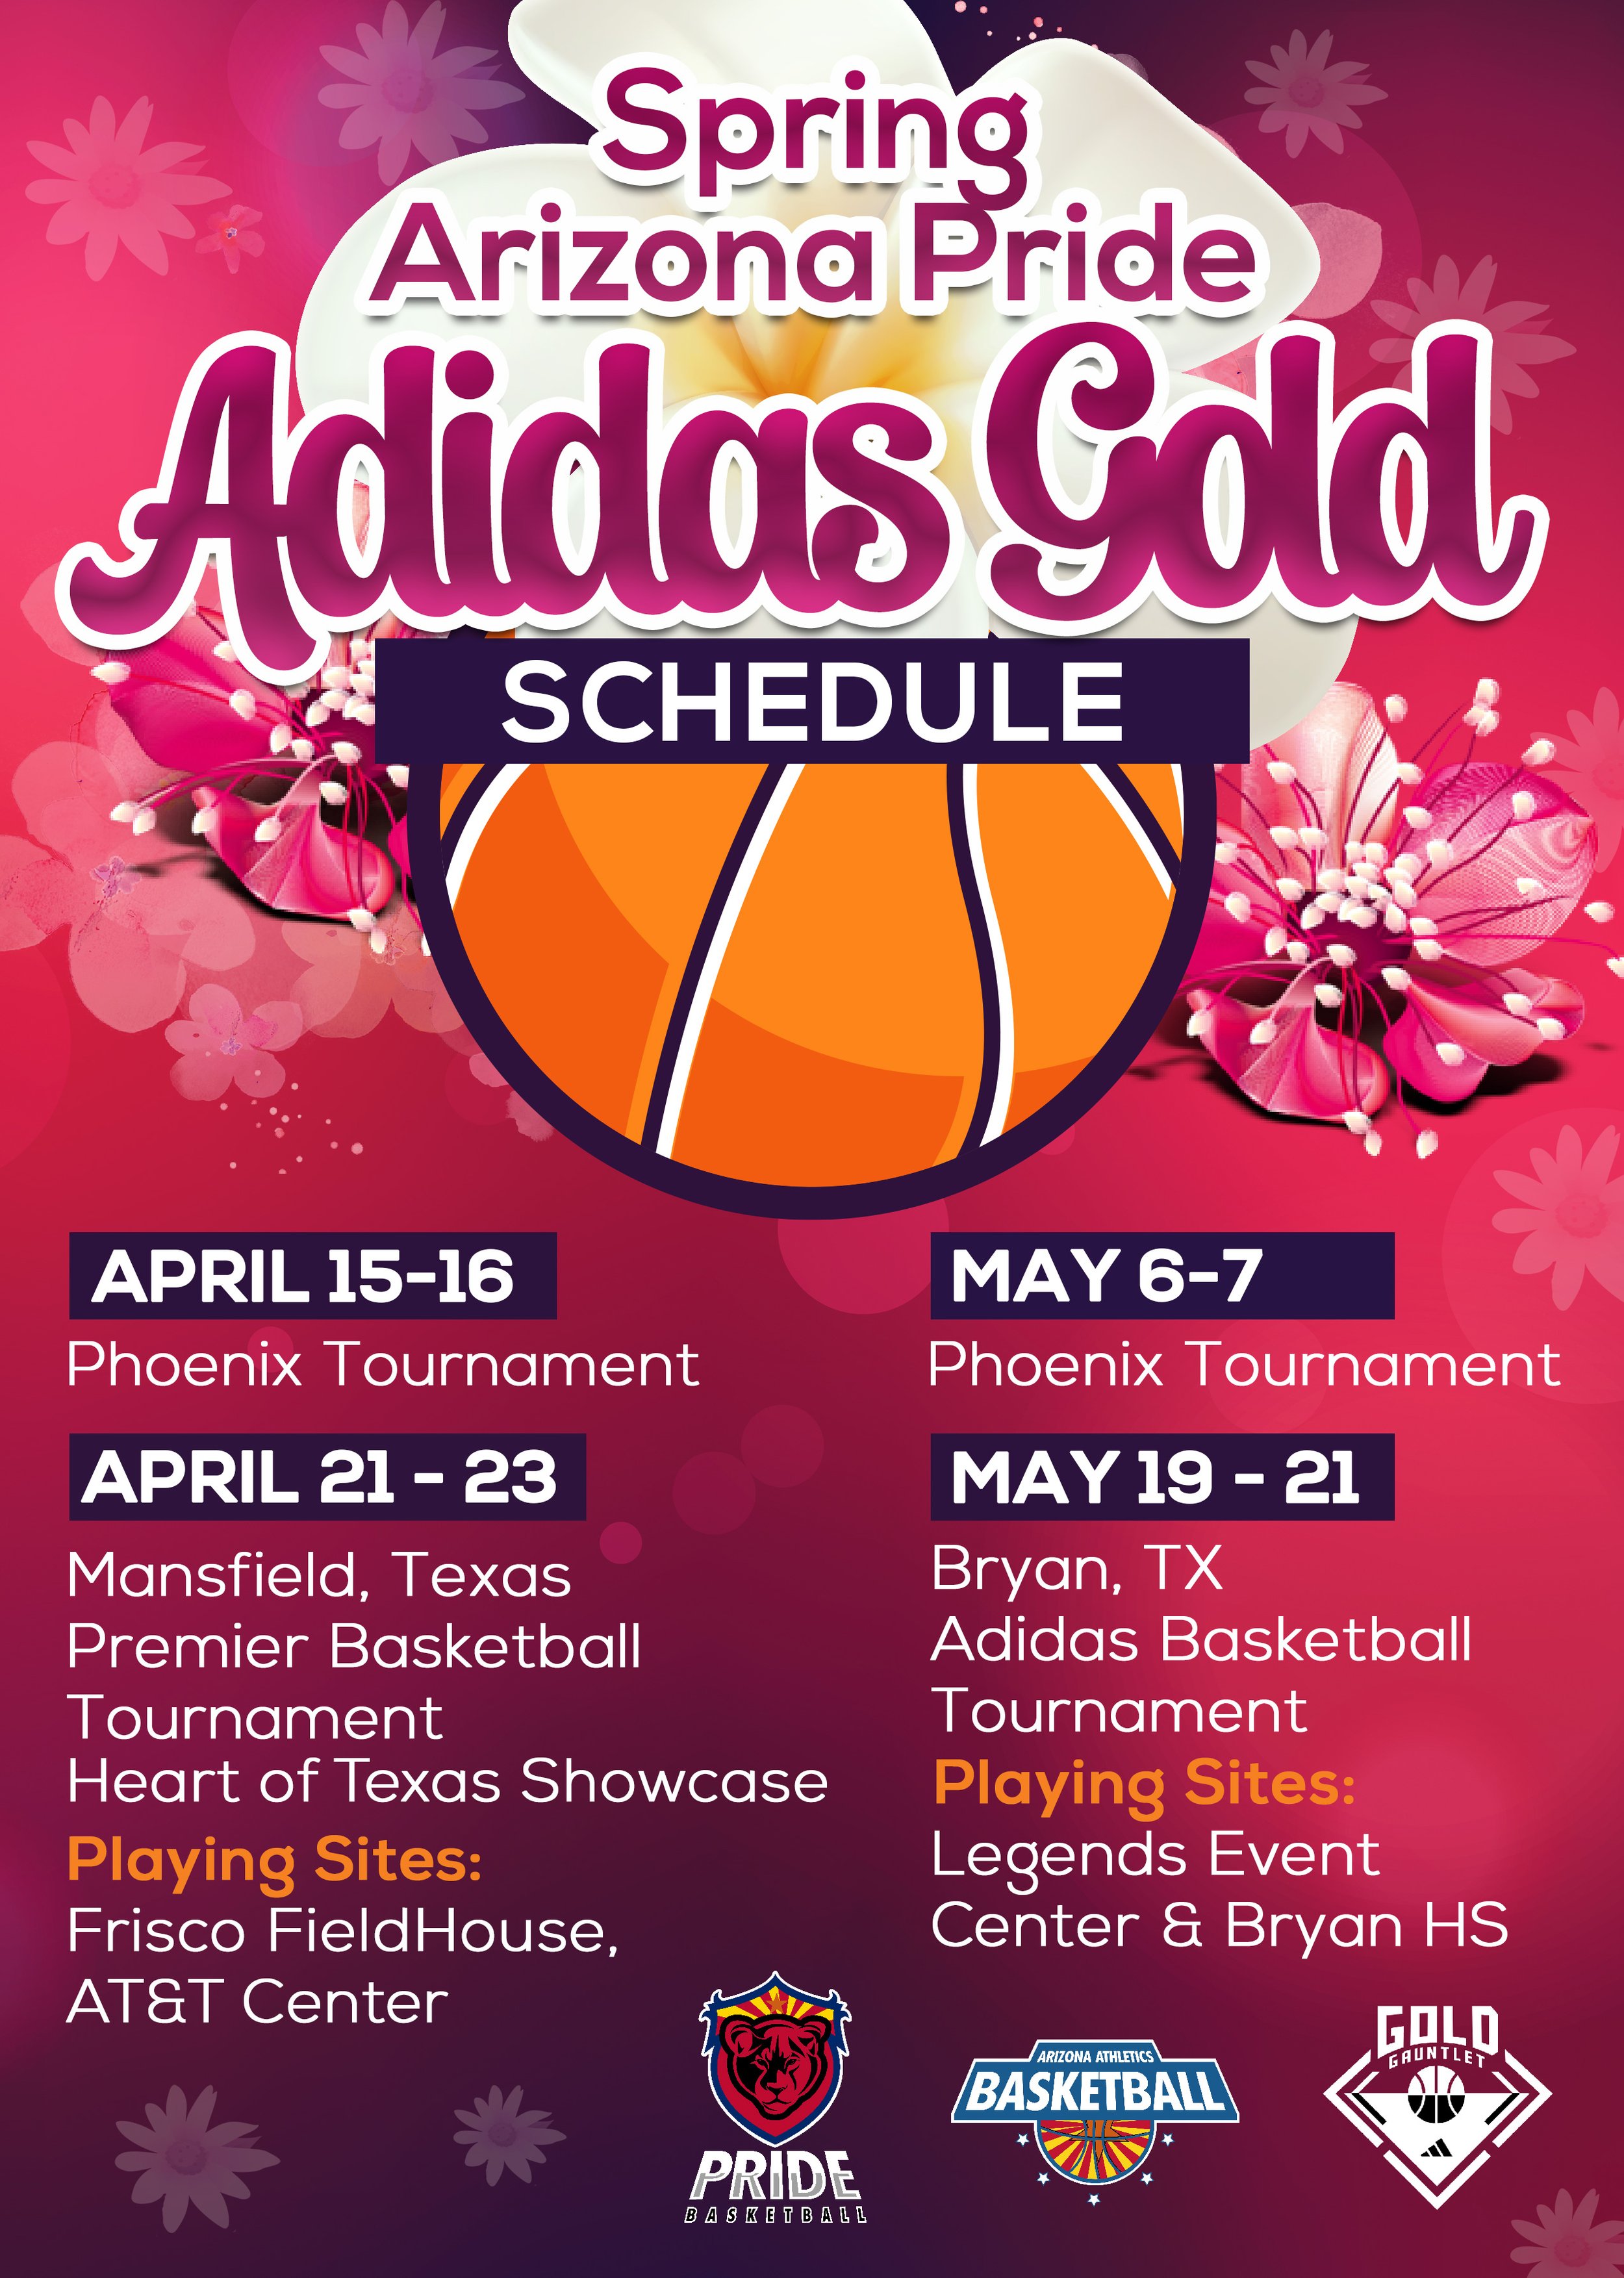 Adidas Gold Spring Schedule. Arizona Girls CLub Basketball AAU NCAA Scholarships Coaching Near me Phoenix Arcadia Biltmore Scottsdale.JPG